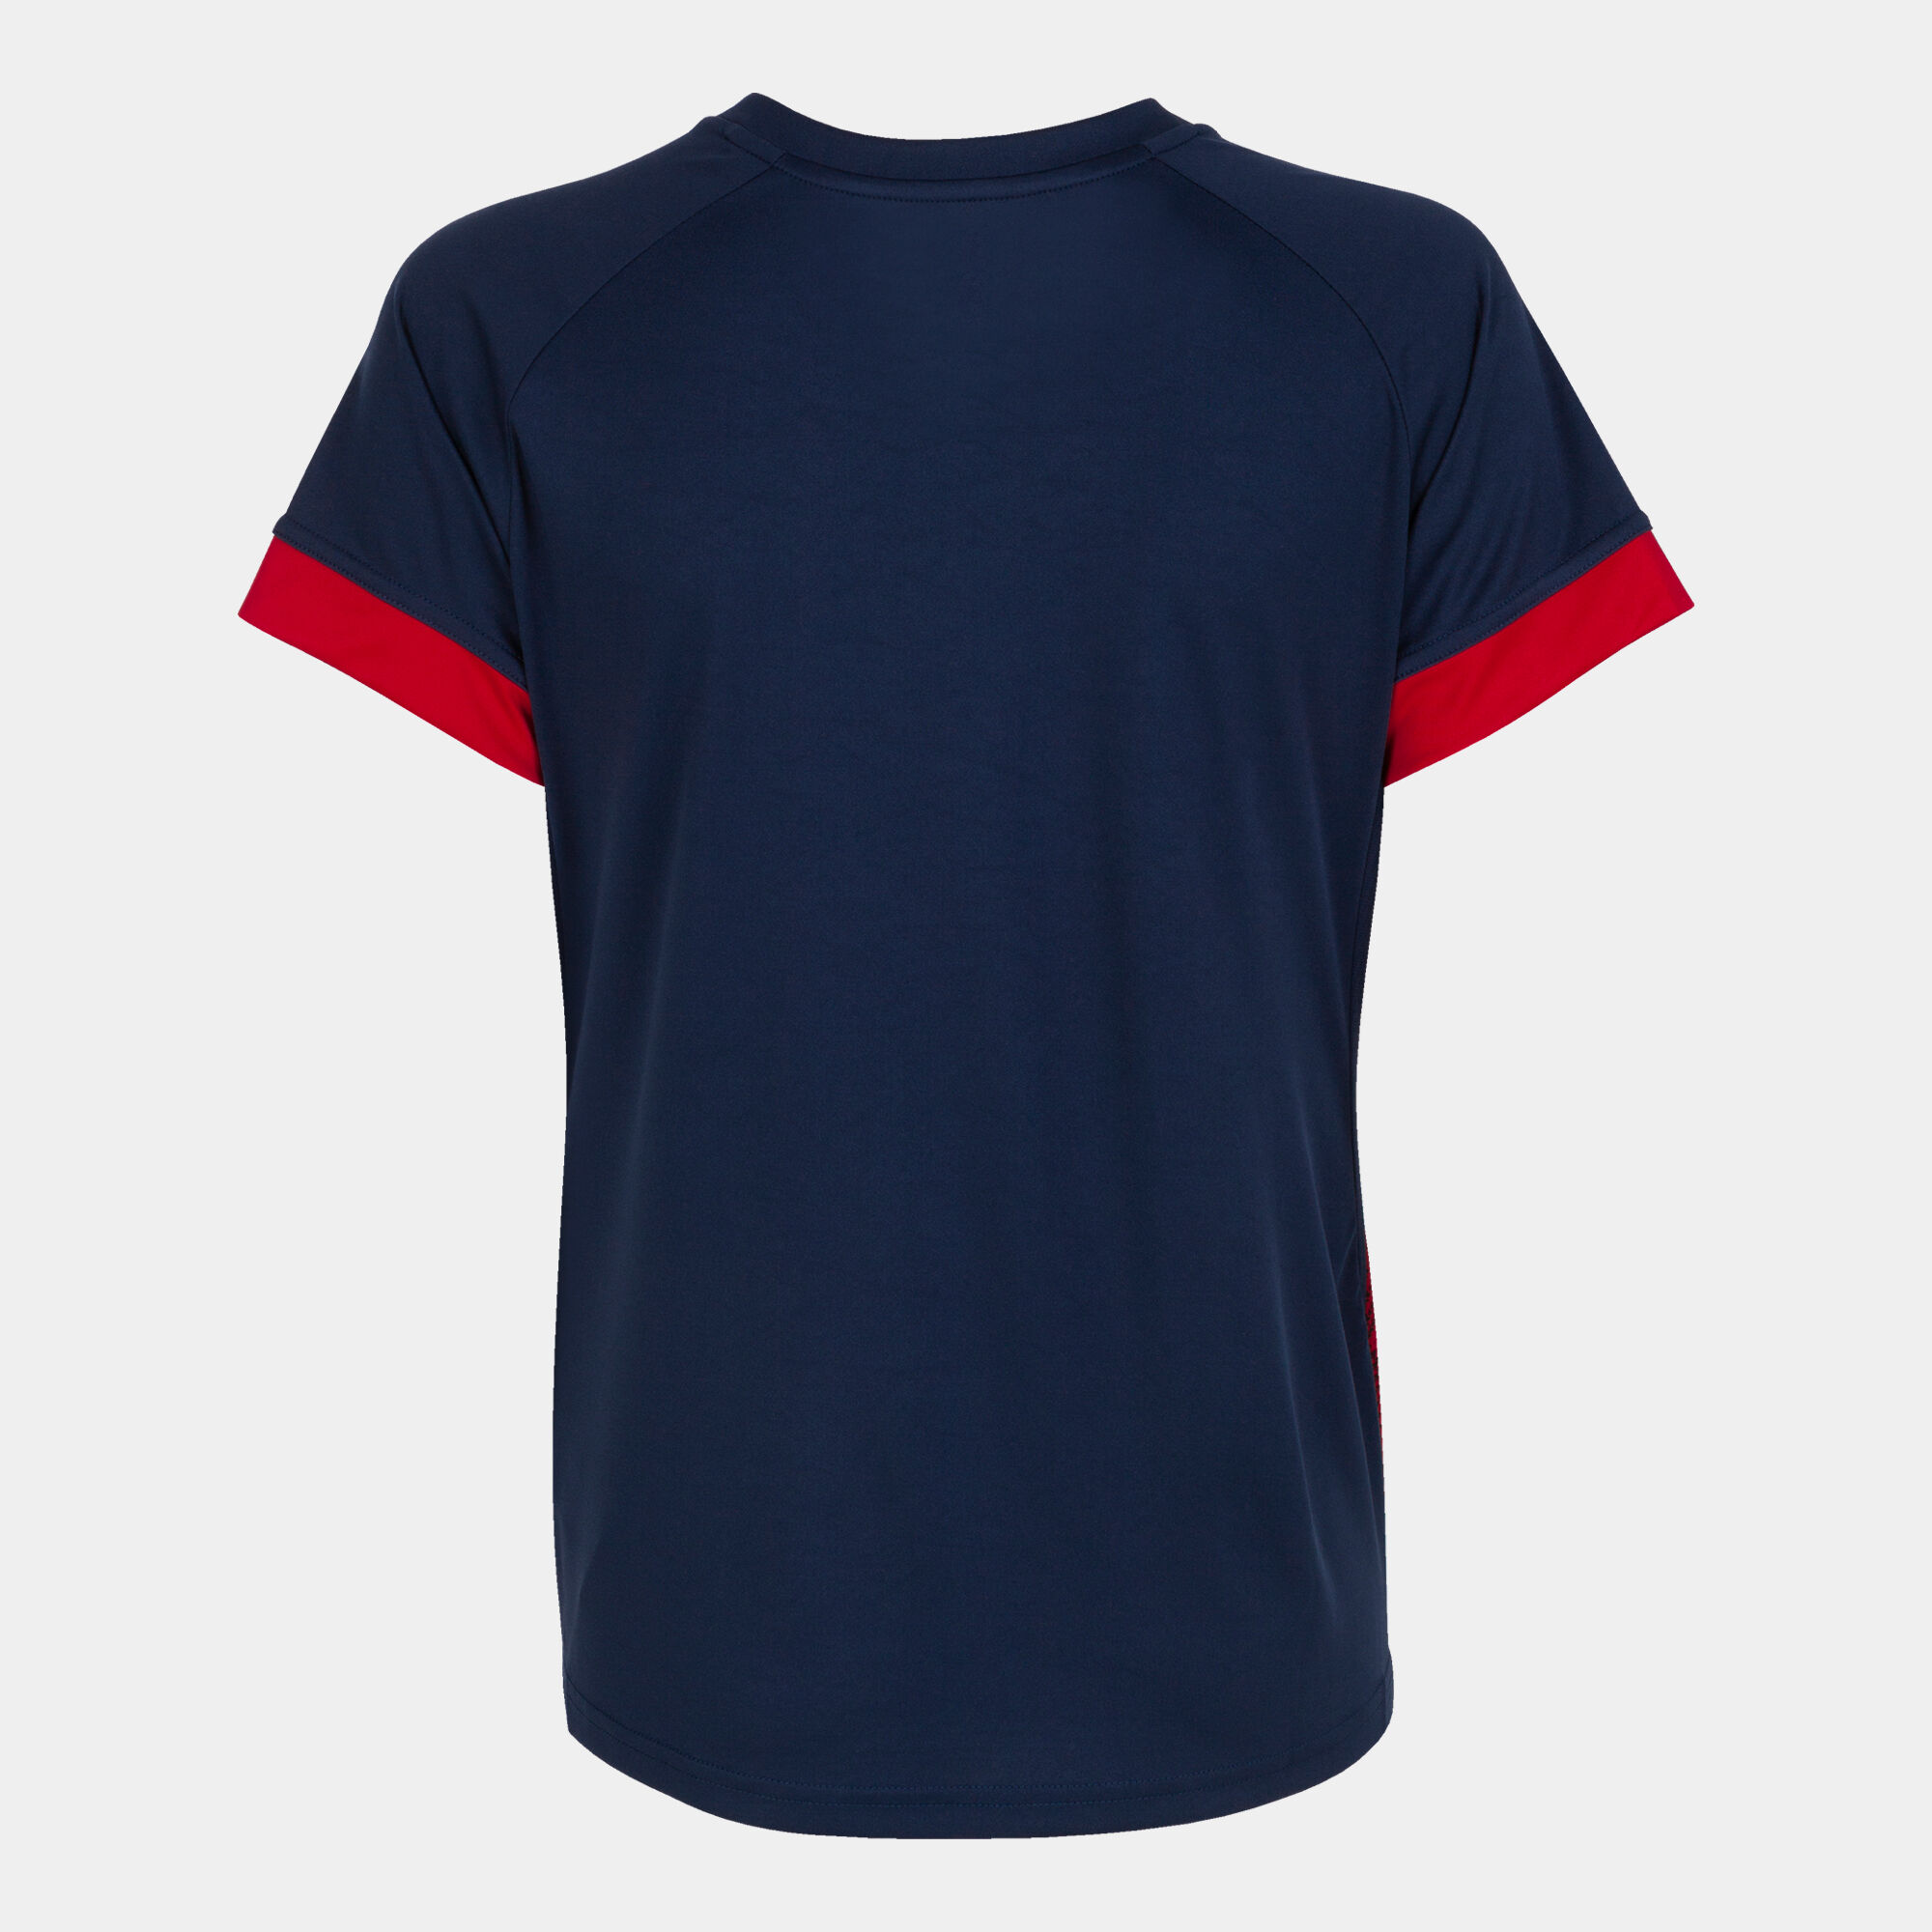 Camiseta manga corta mujer Supernova III marino rojo